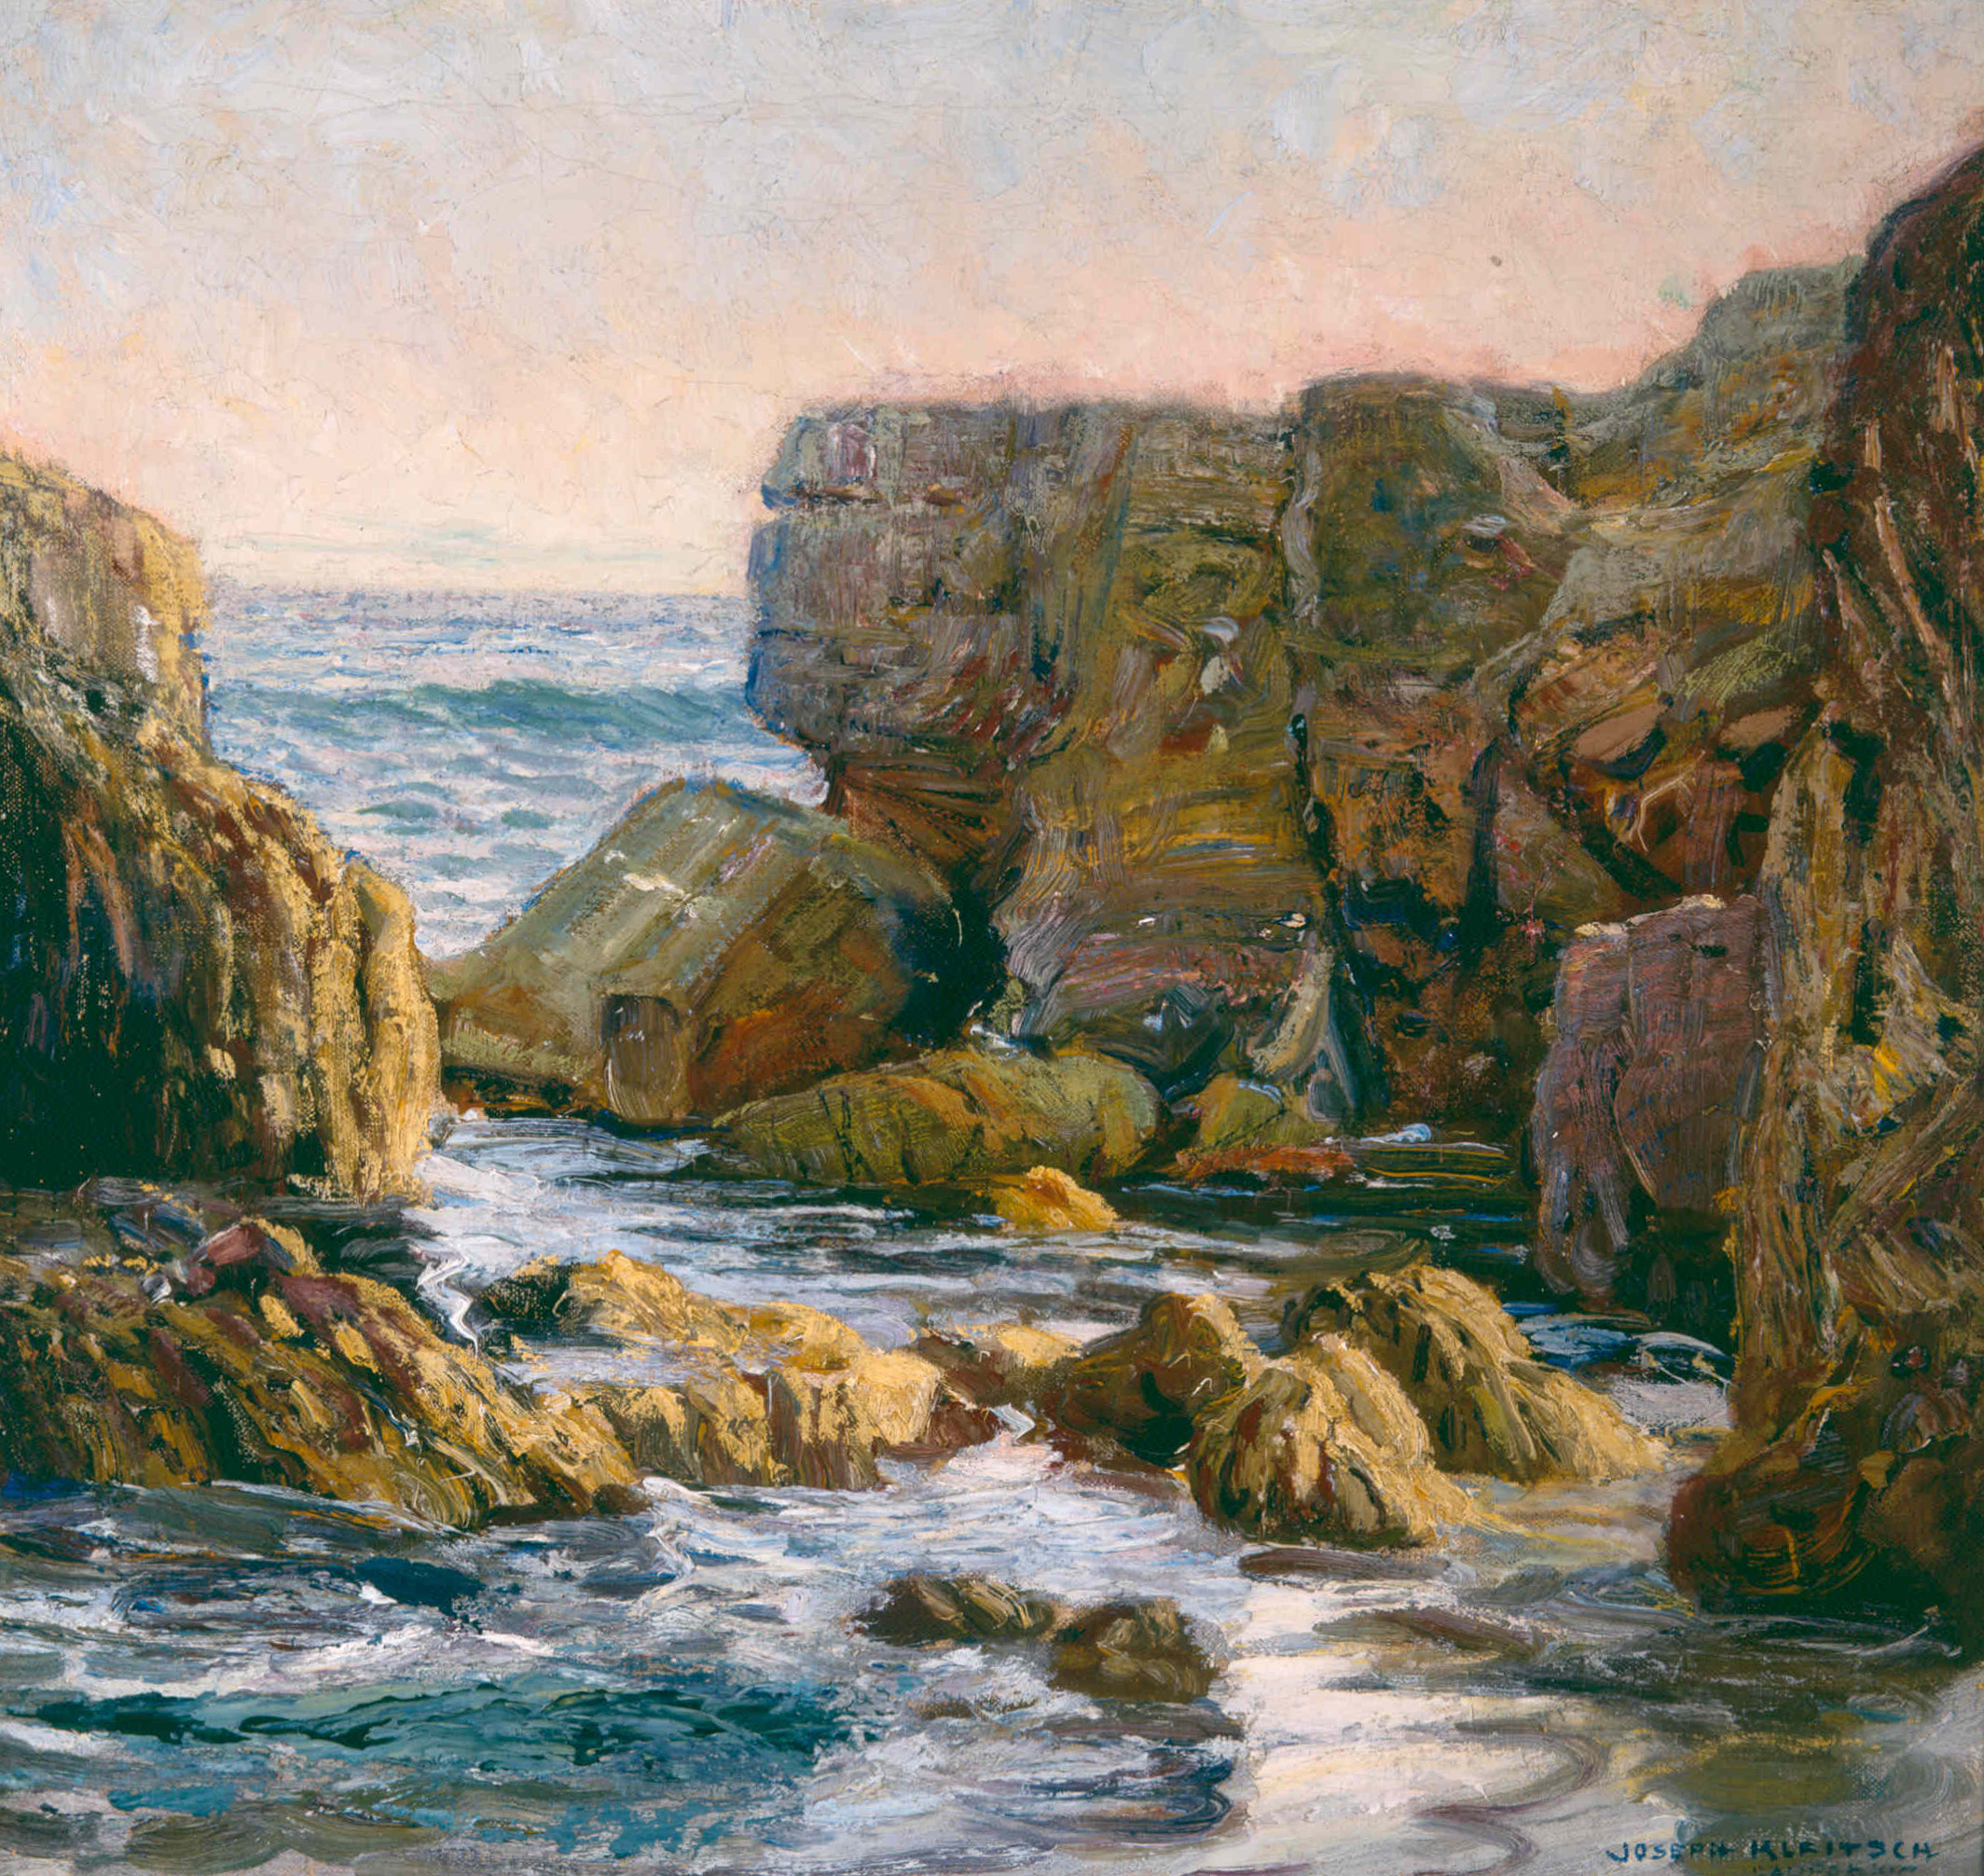    Rocky Cove, Laguna   / Oil on Canvas, 21 x 22 in.  Private Collection 